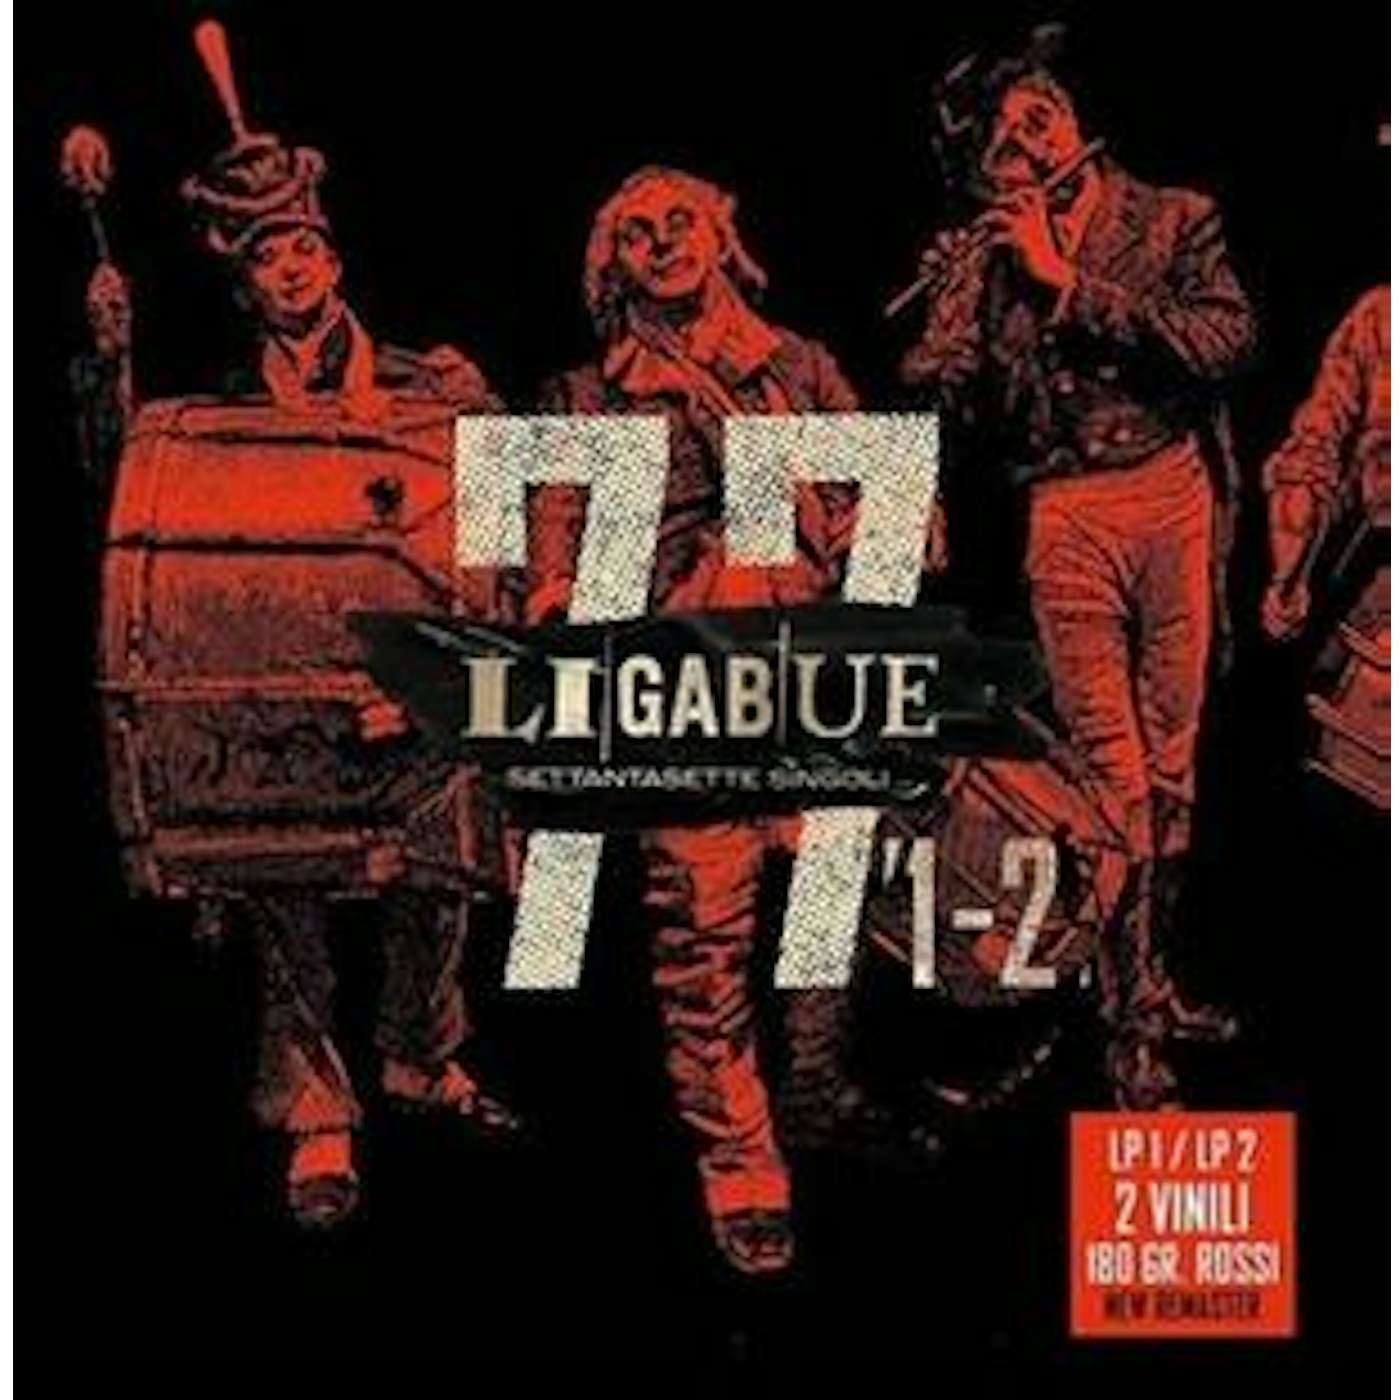 Ligabue 77 SINGOLI / LP 1-LP 2 Vinyl Record